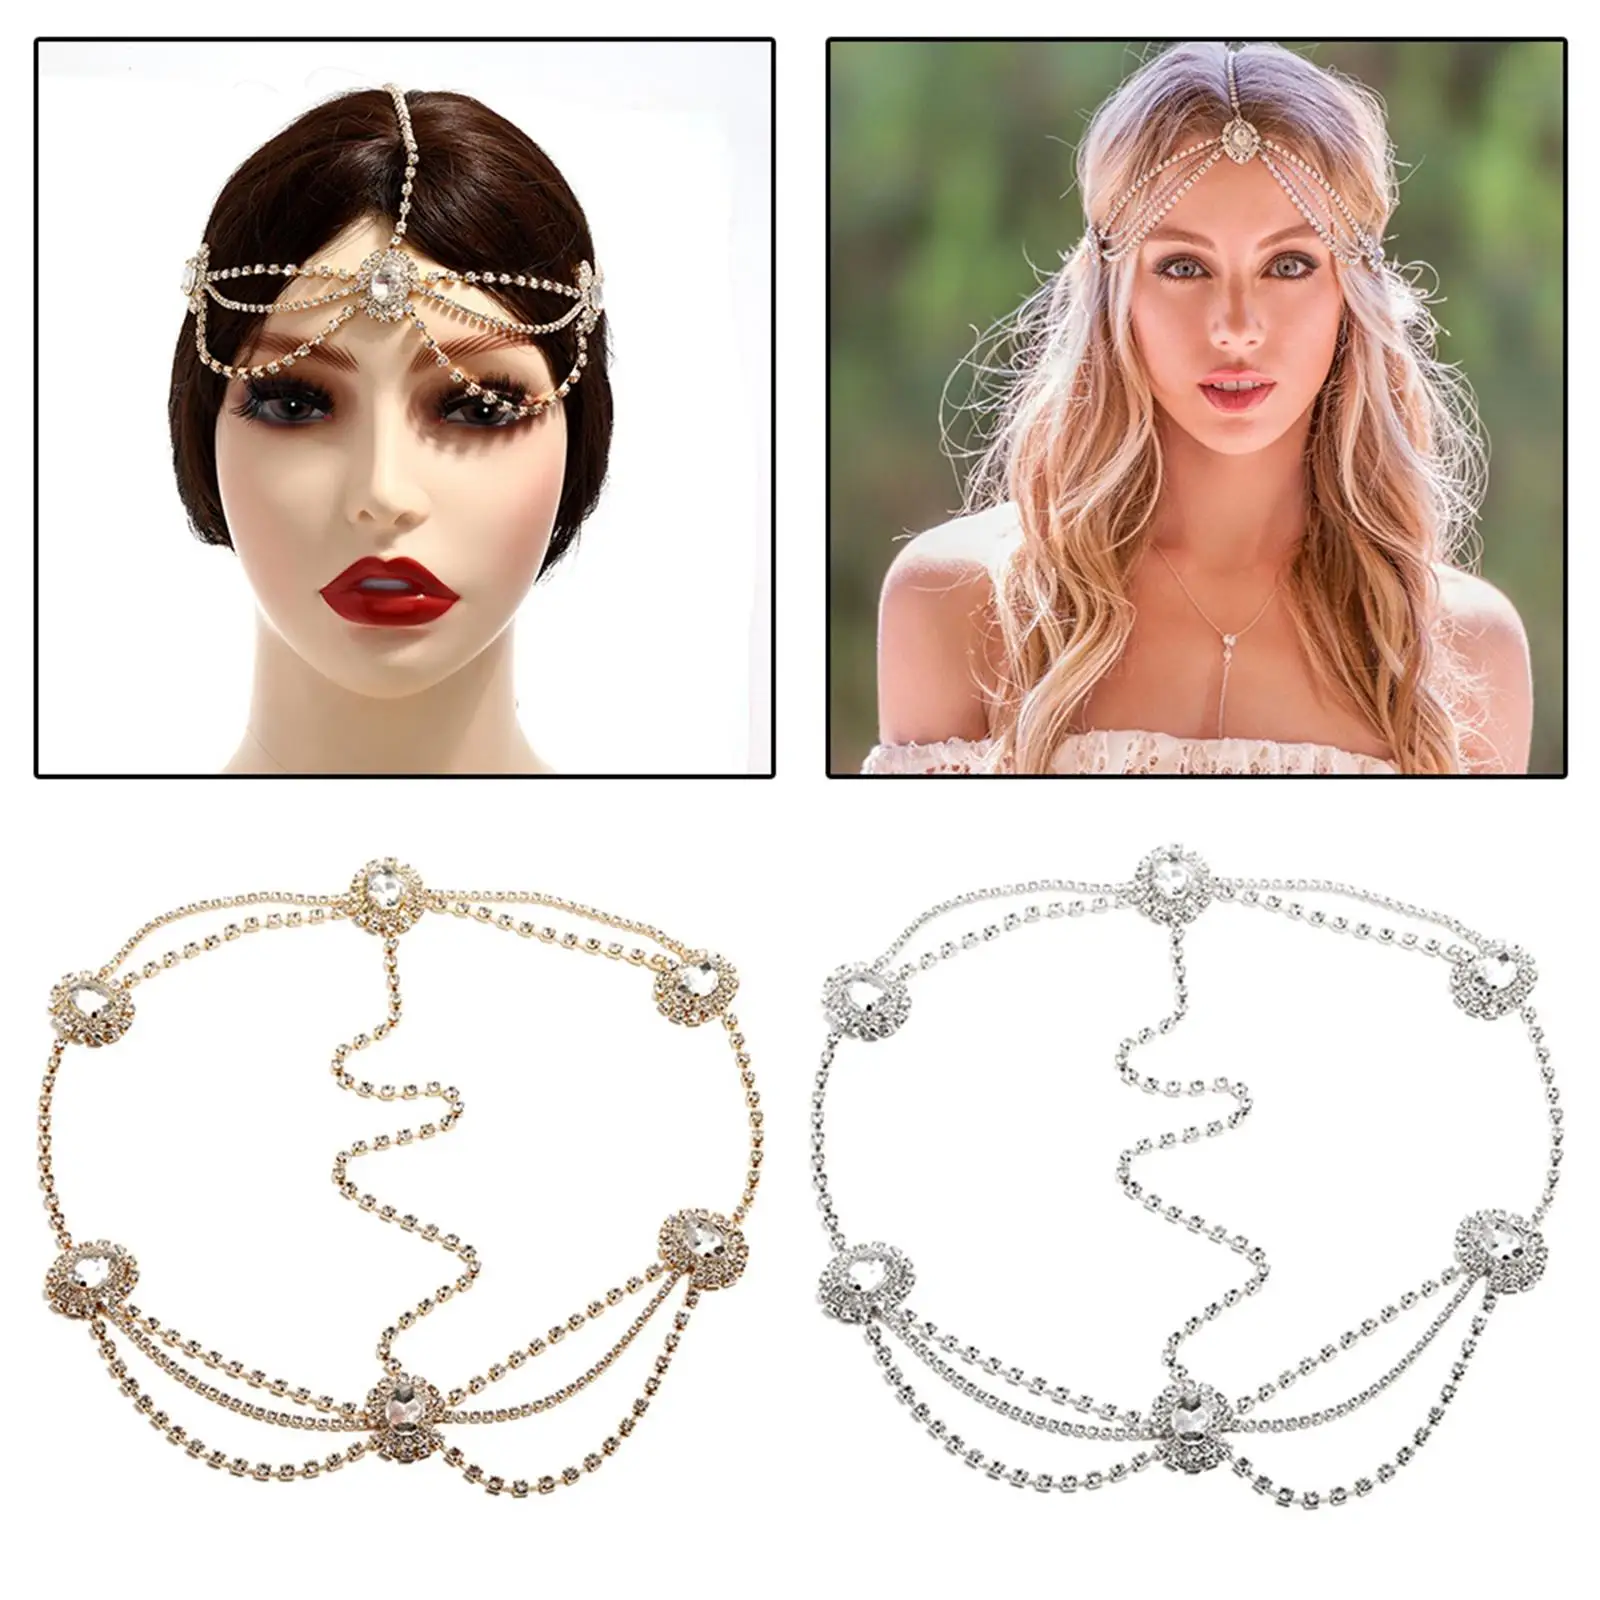 Head Chain Rhinestones Layered Jewelry Boho Glamorous Fashion for Party Prom